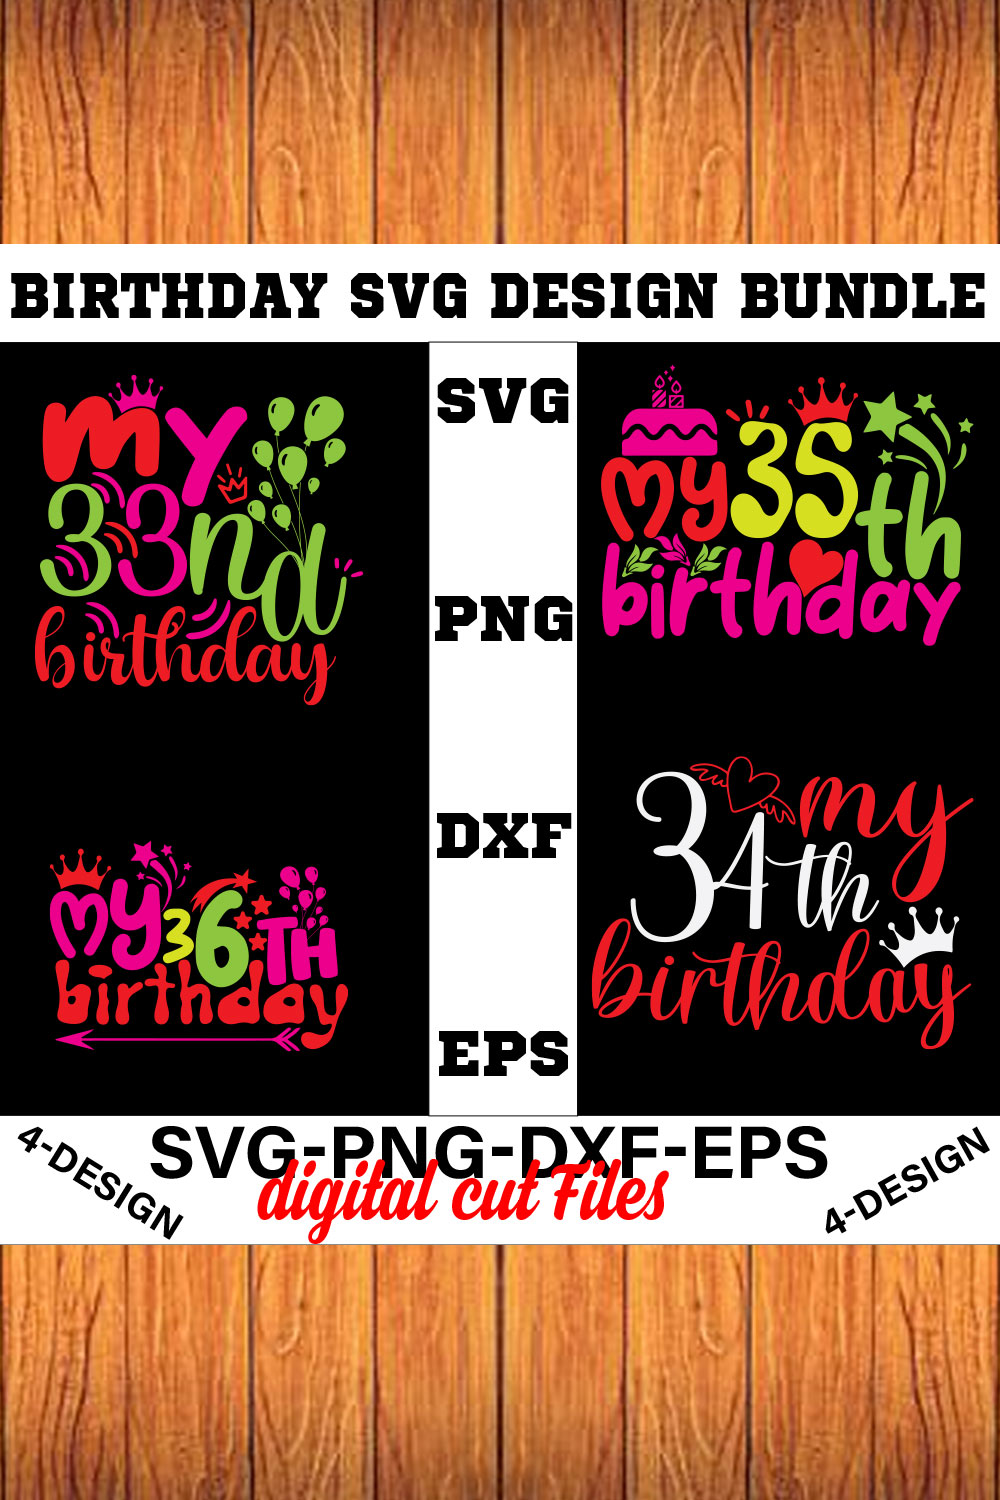 birthday svg design bundle Happy birthday svg bundle hand lettered birthday svg birthday party svg Volume-09 pinterest preview image.